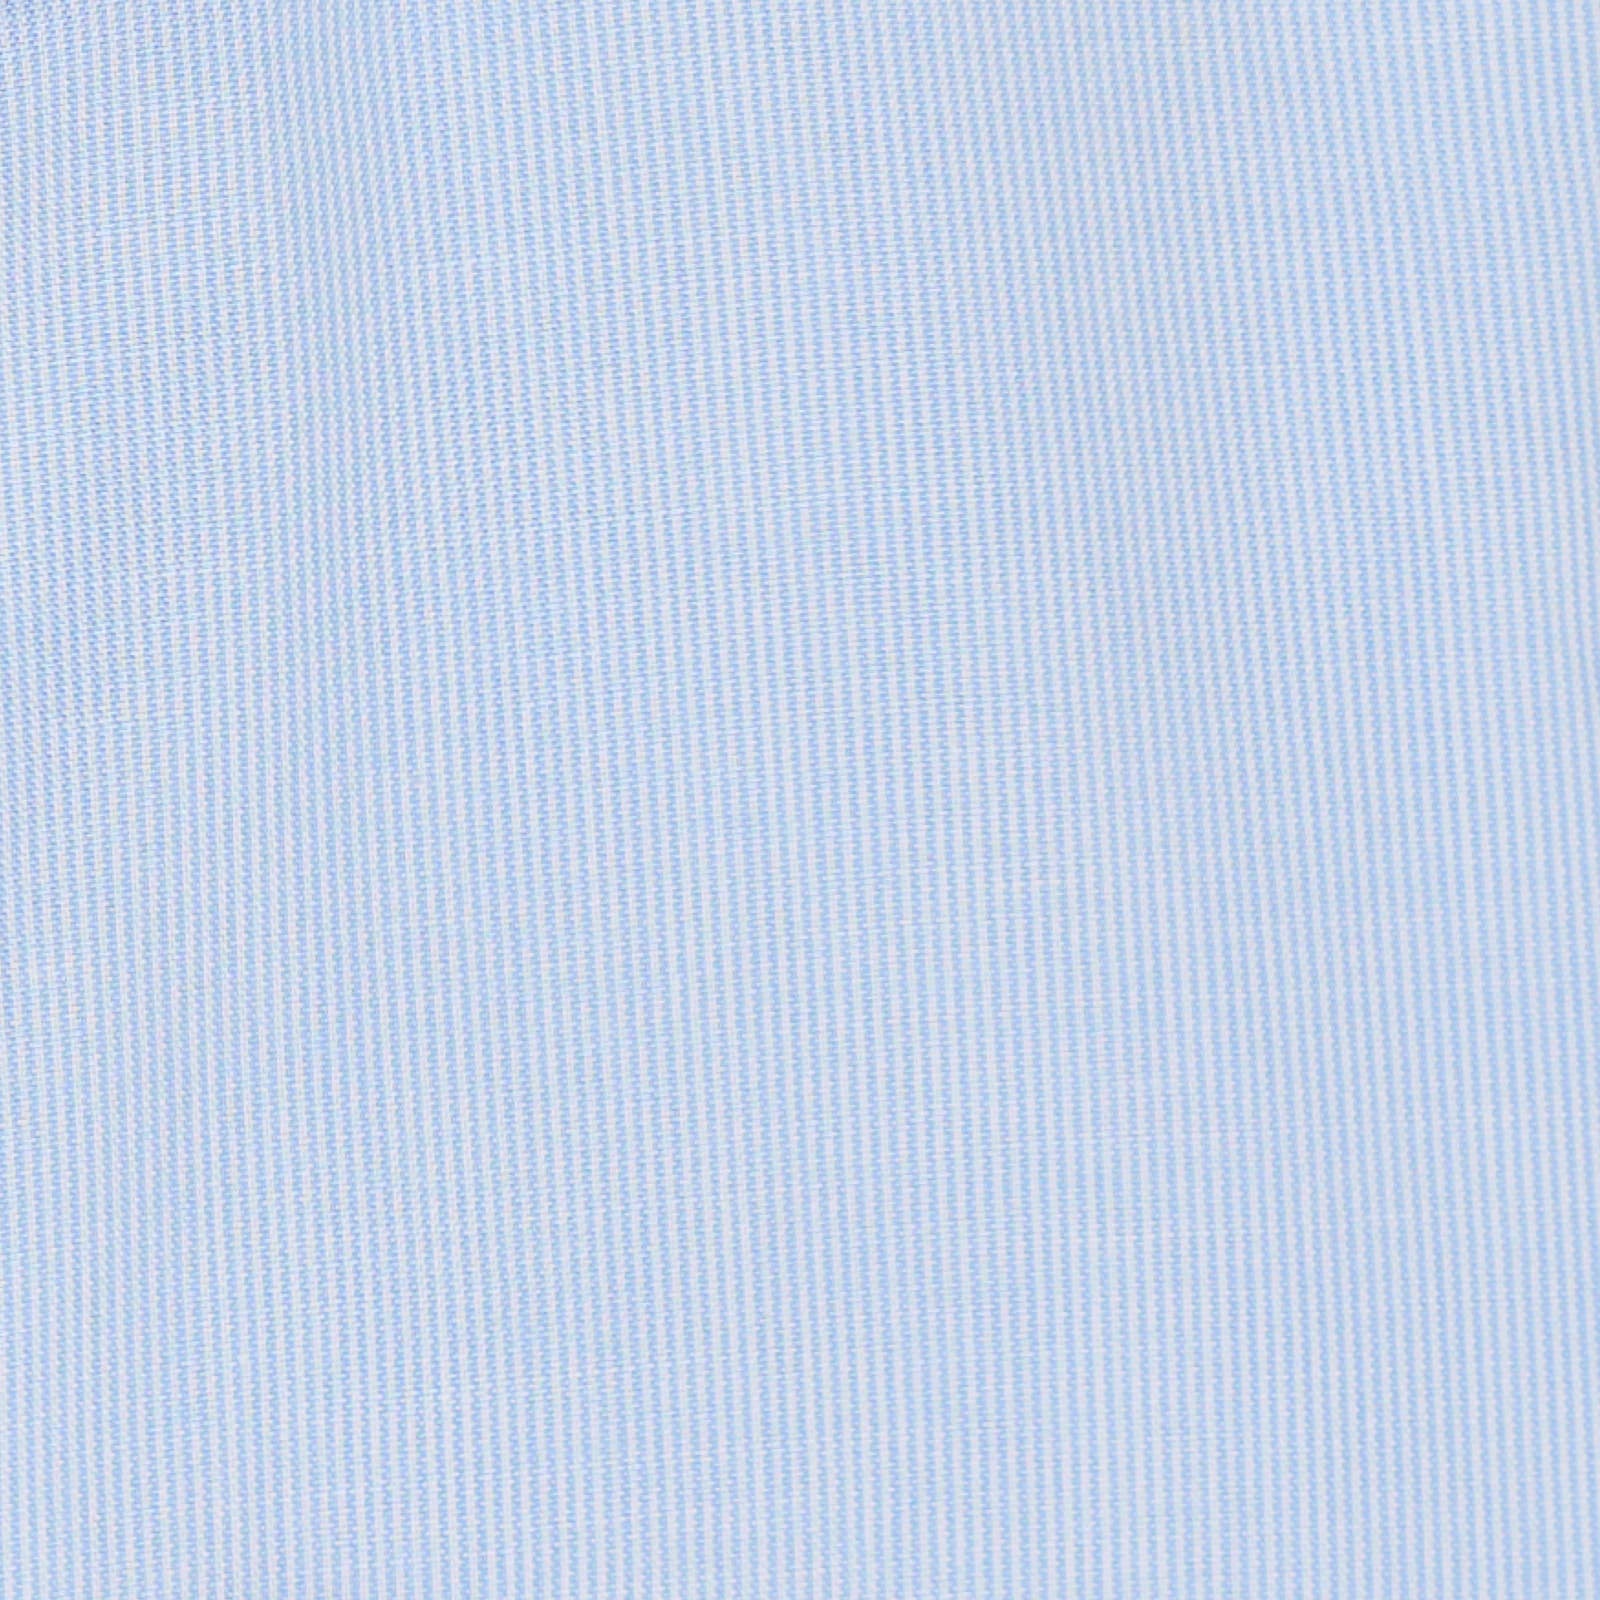 KITON Napoli Handmade Blue Striped Poplin Cotton Dress Shirt EU 45 NEW US 18